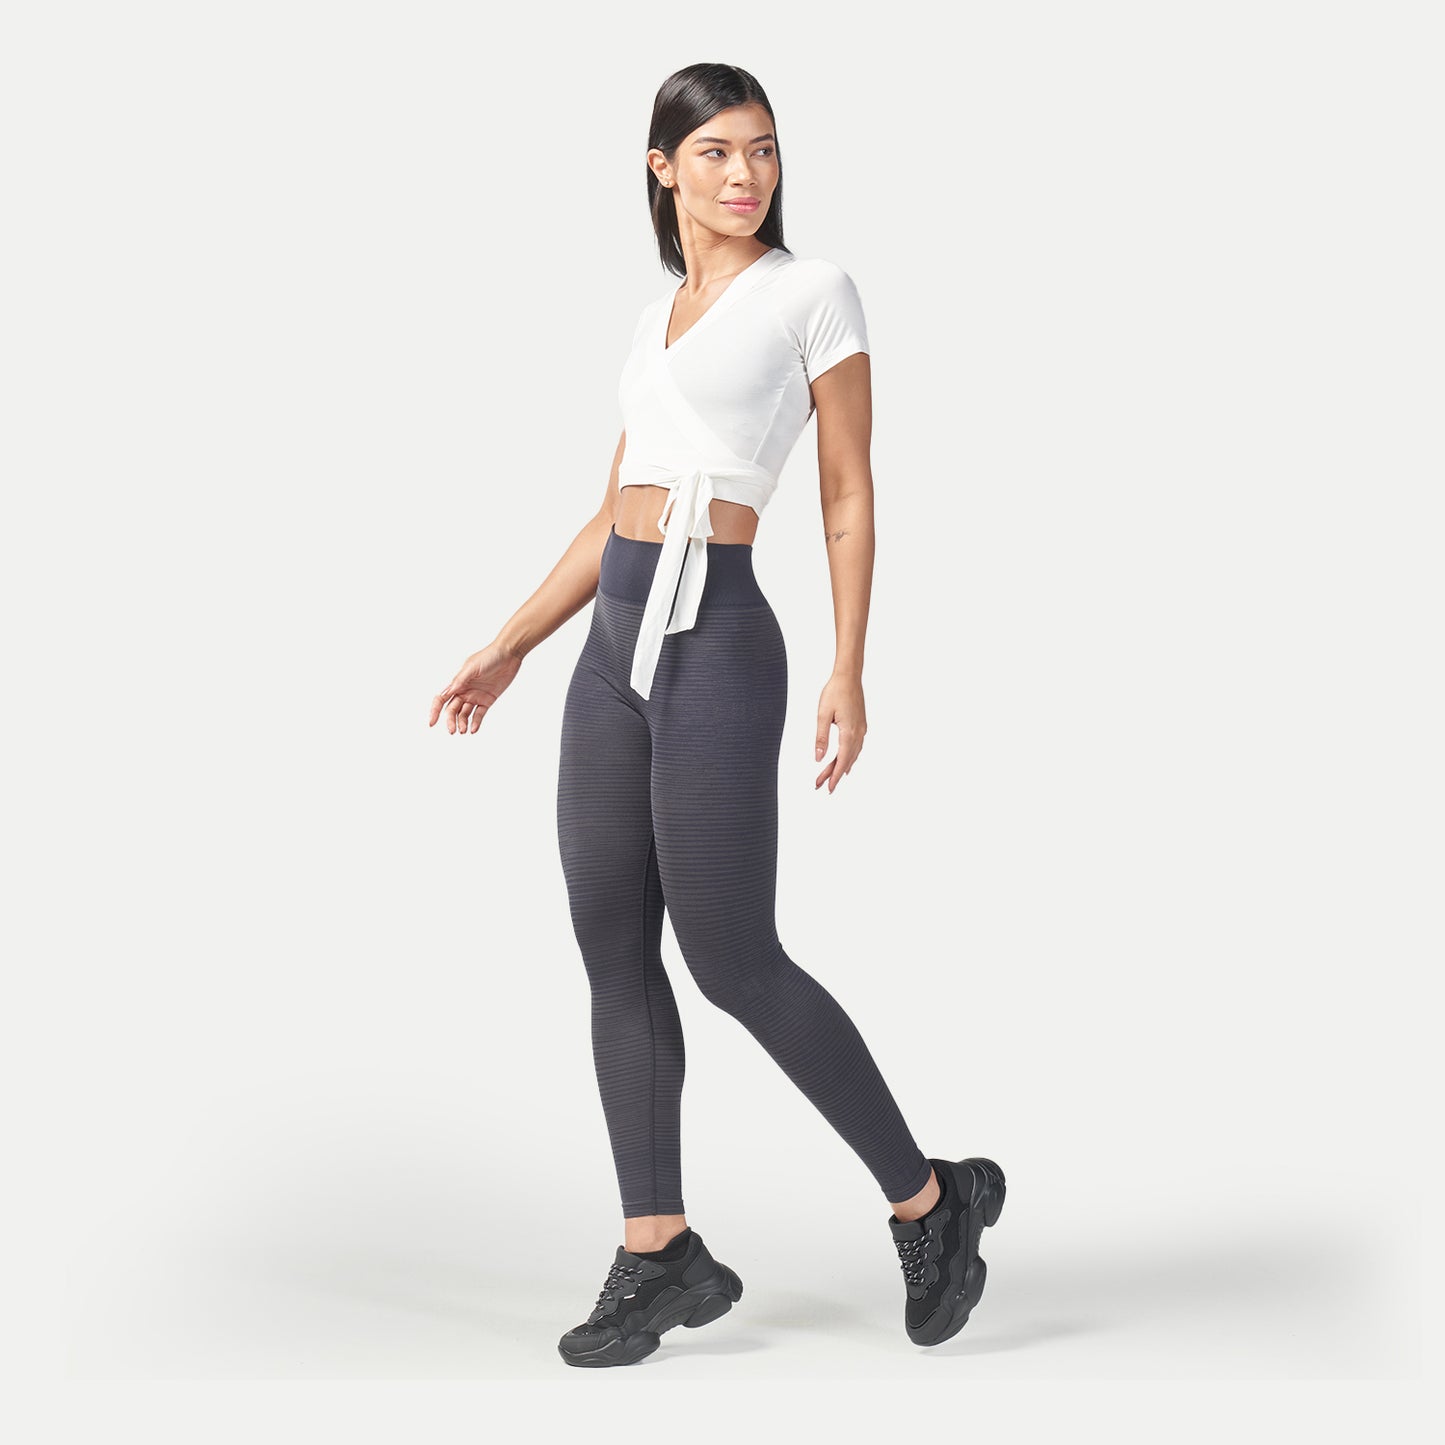 squatwolf-workout-clothes-infinity-ballerina-top-blanc-de-blanc-gym-t-shirts-for-women